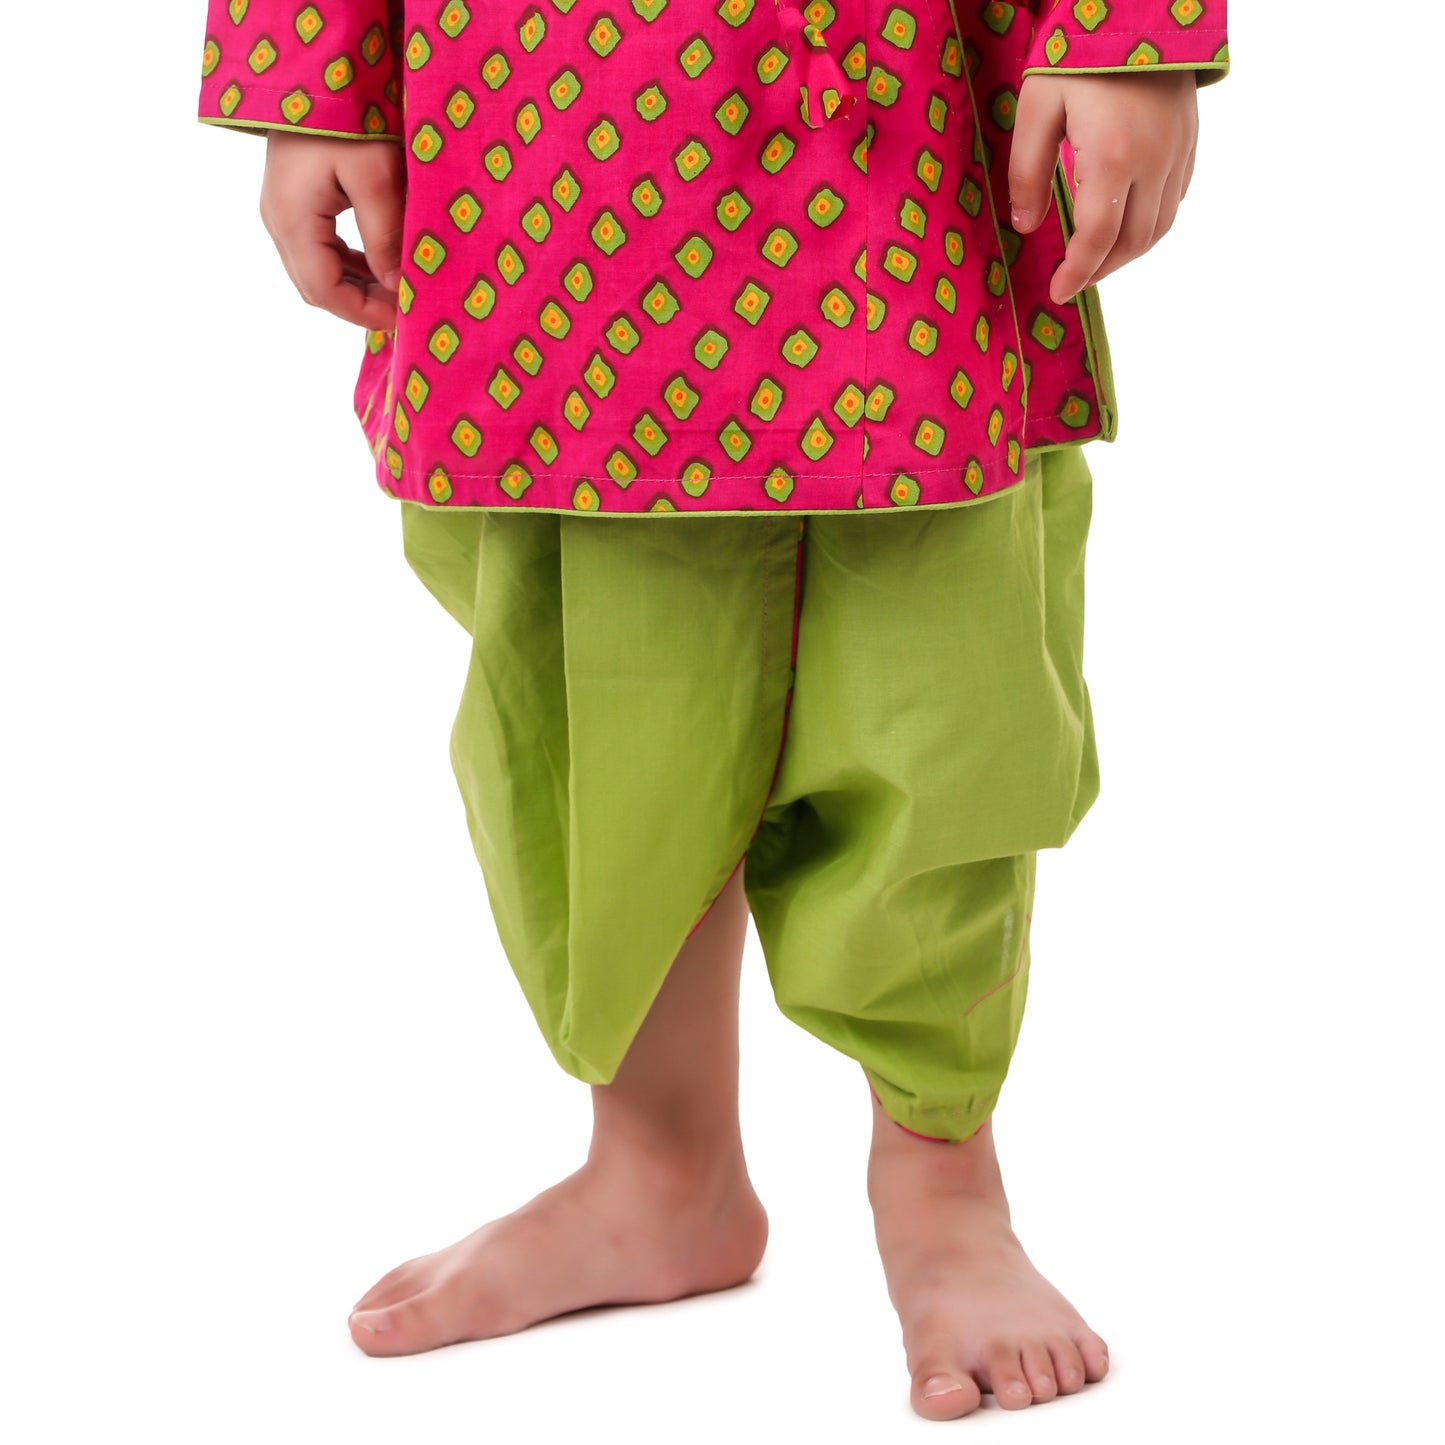 Pink Dhoti Kurta for Boys, Ages 3 Months-16 Years, Cotton, Angrakha Style, Bandhani Print